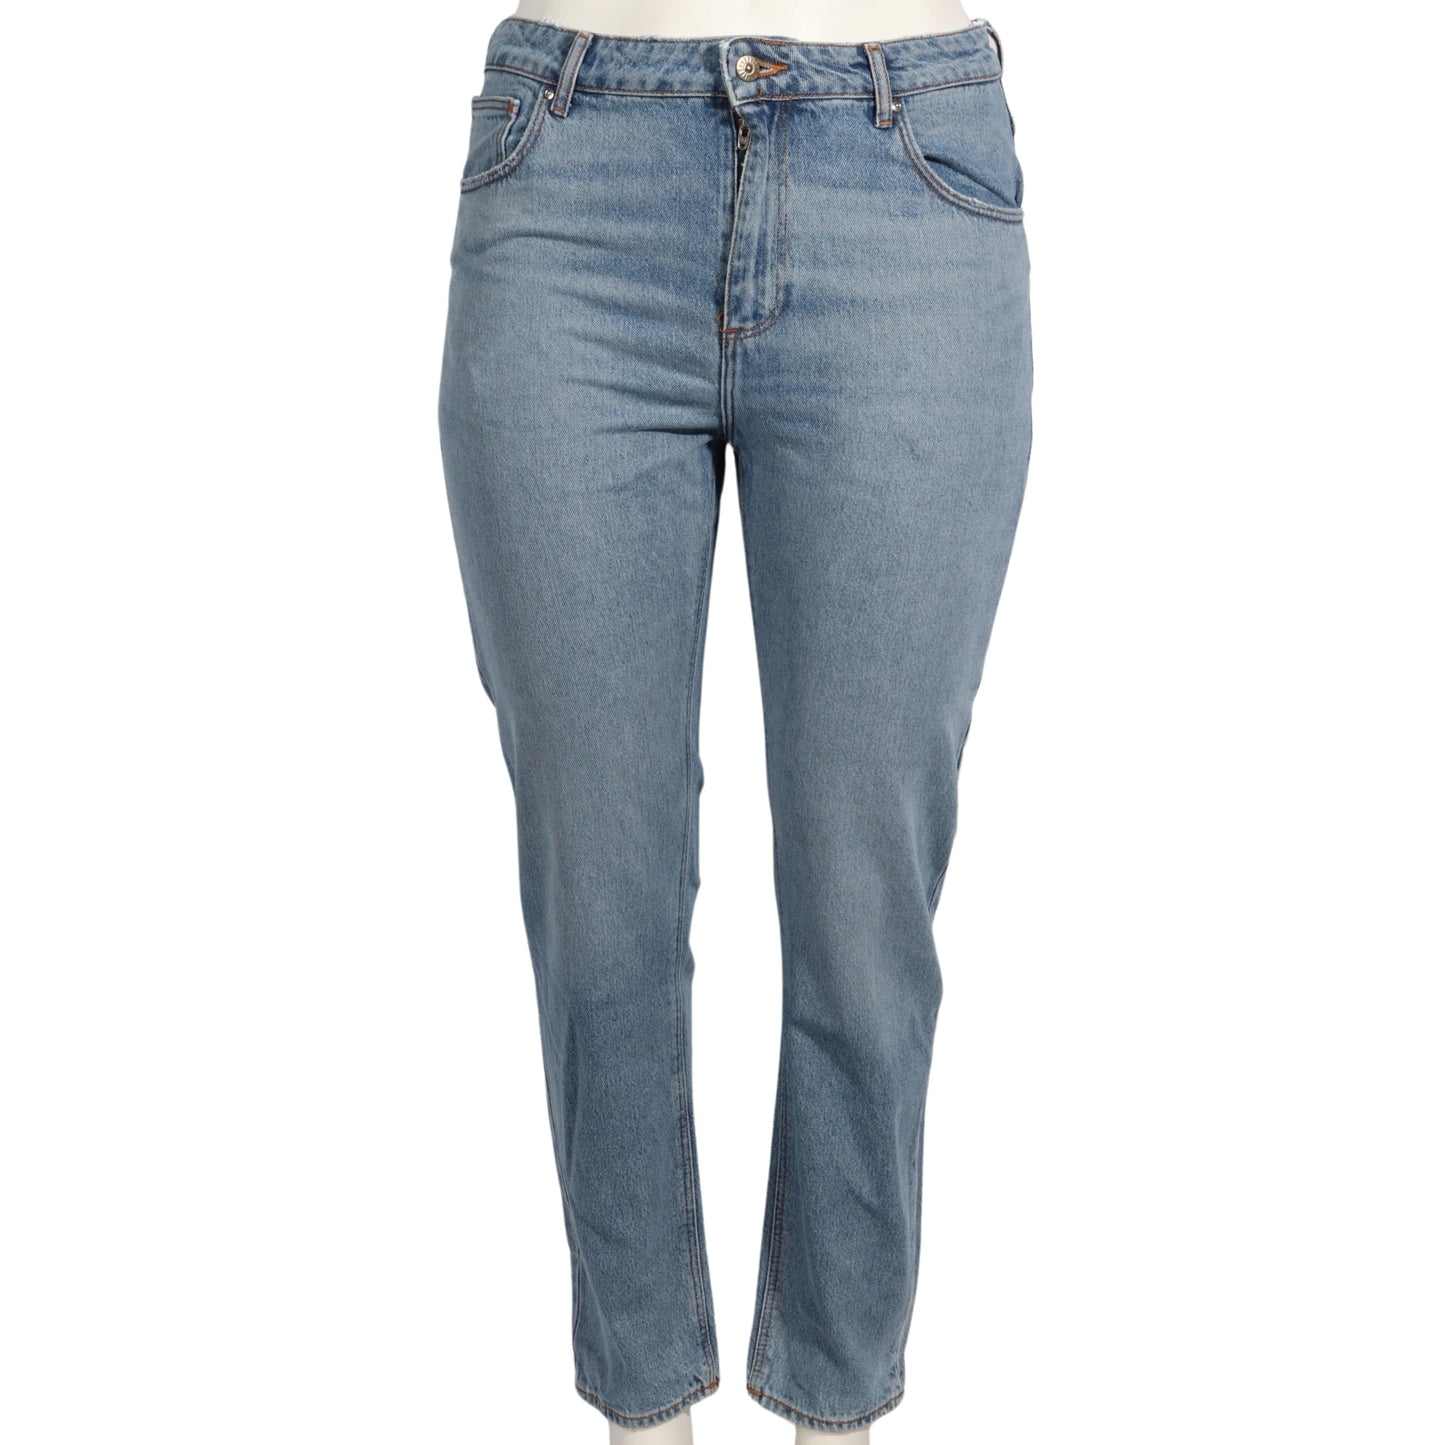 ASOS Womens Bottoms XL / Blue ASOS - Belt Loops Jeans